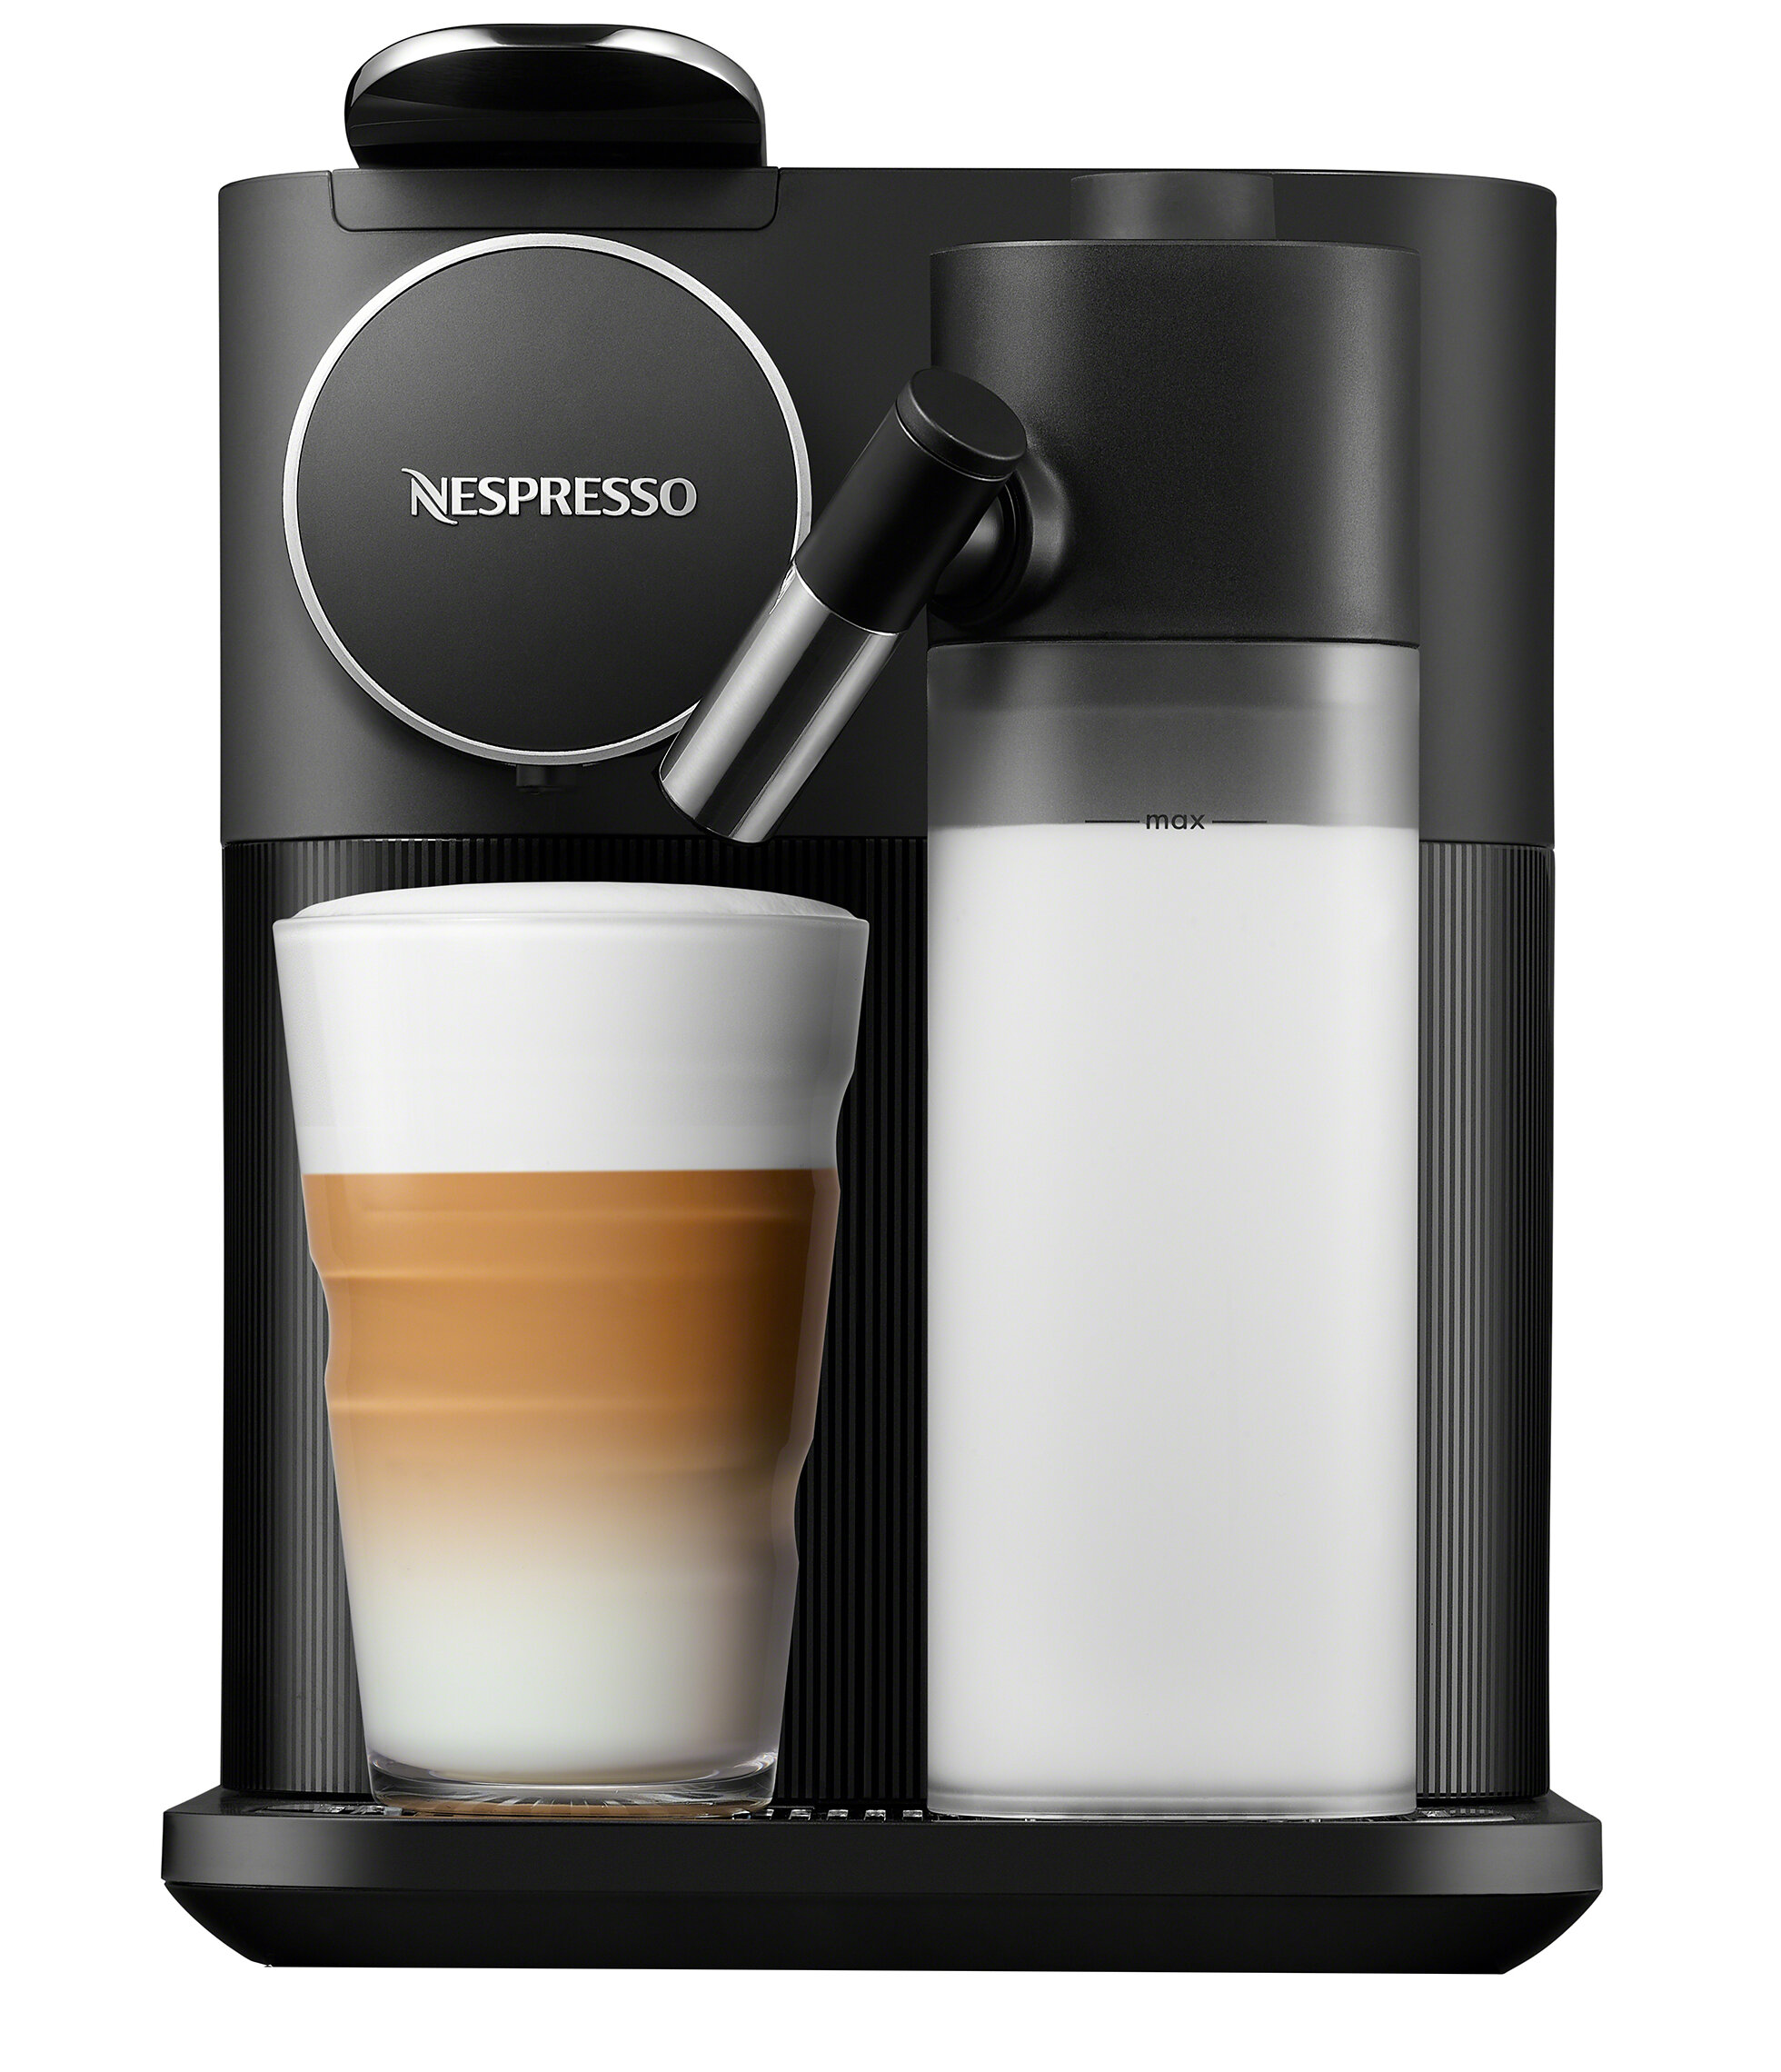 Nespresso Lattissima Original Coffee and Espresso Machine with